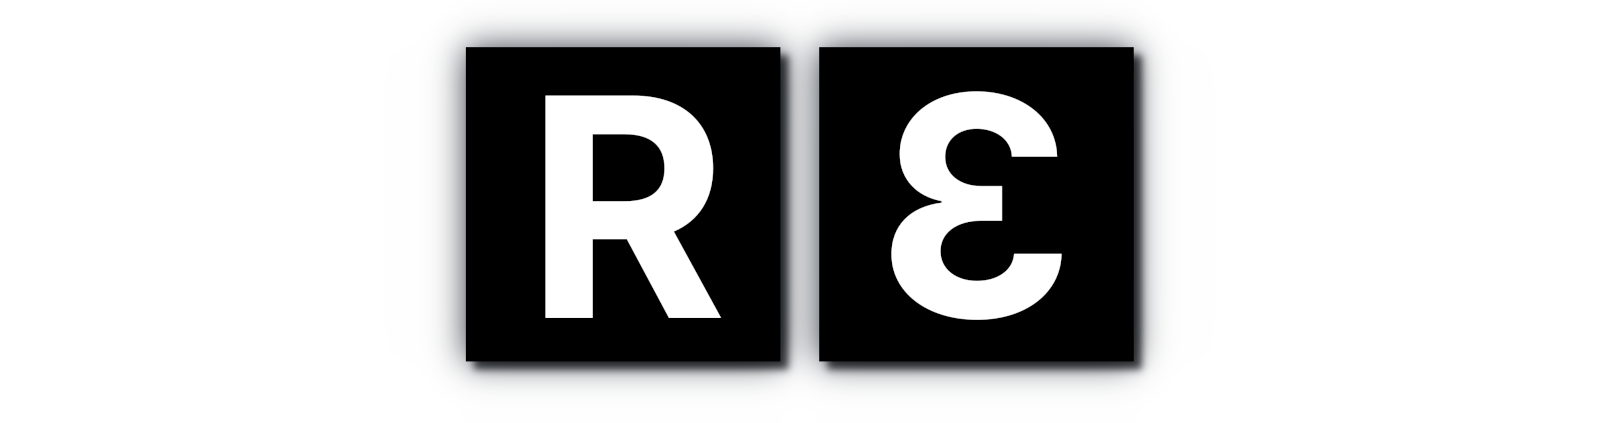 r3_logo_git